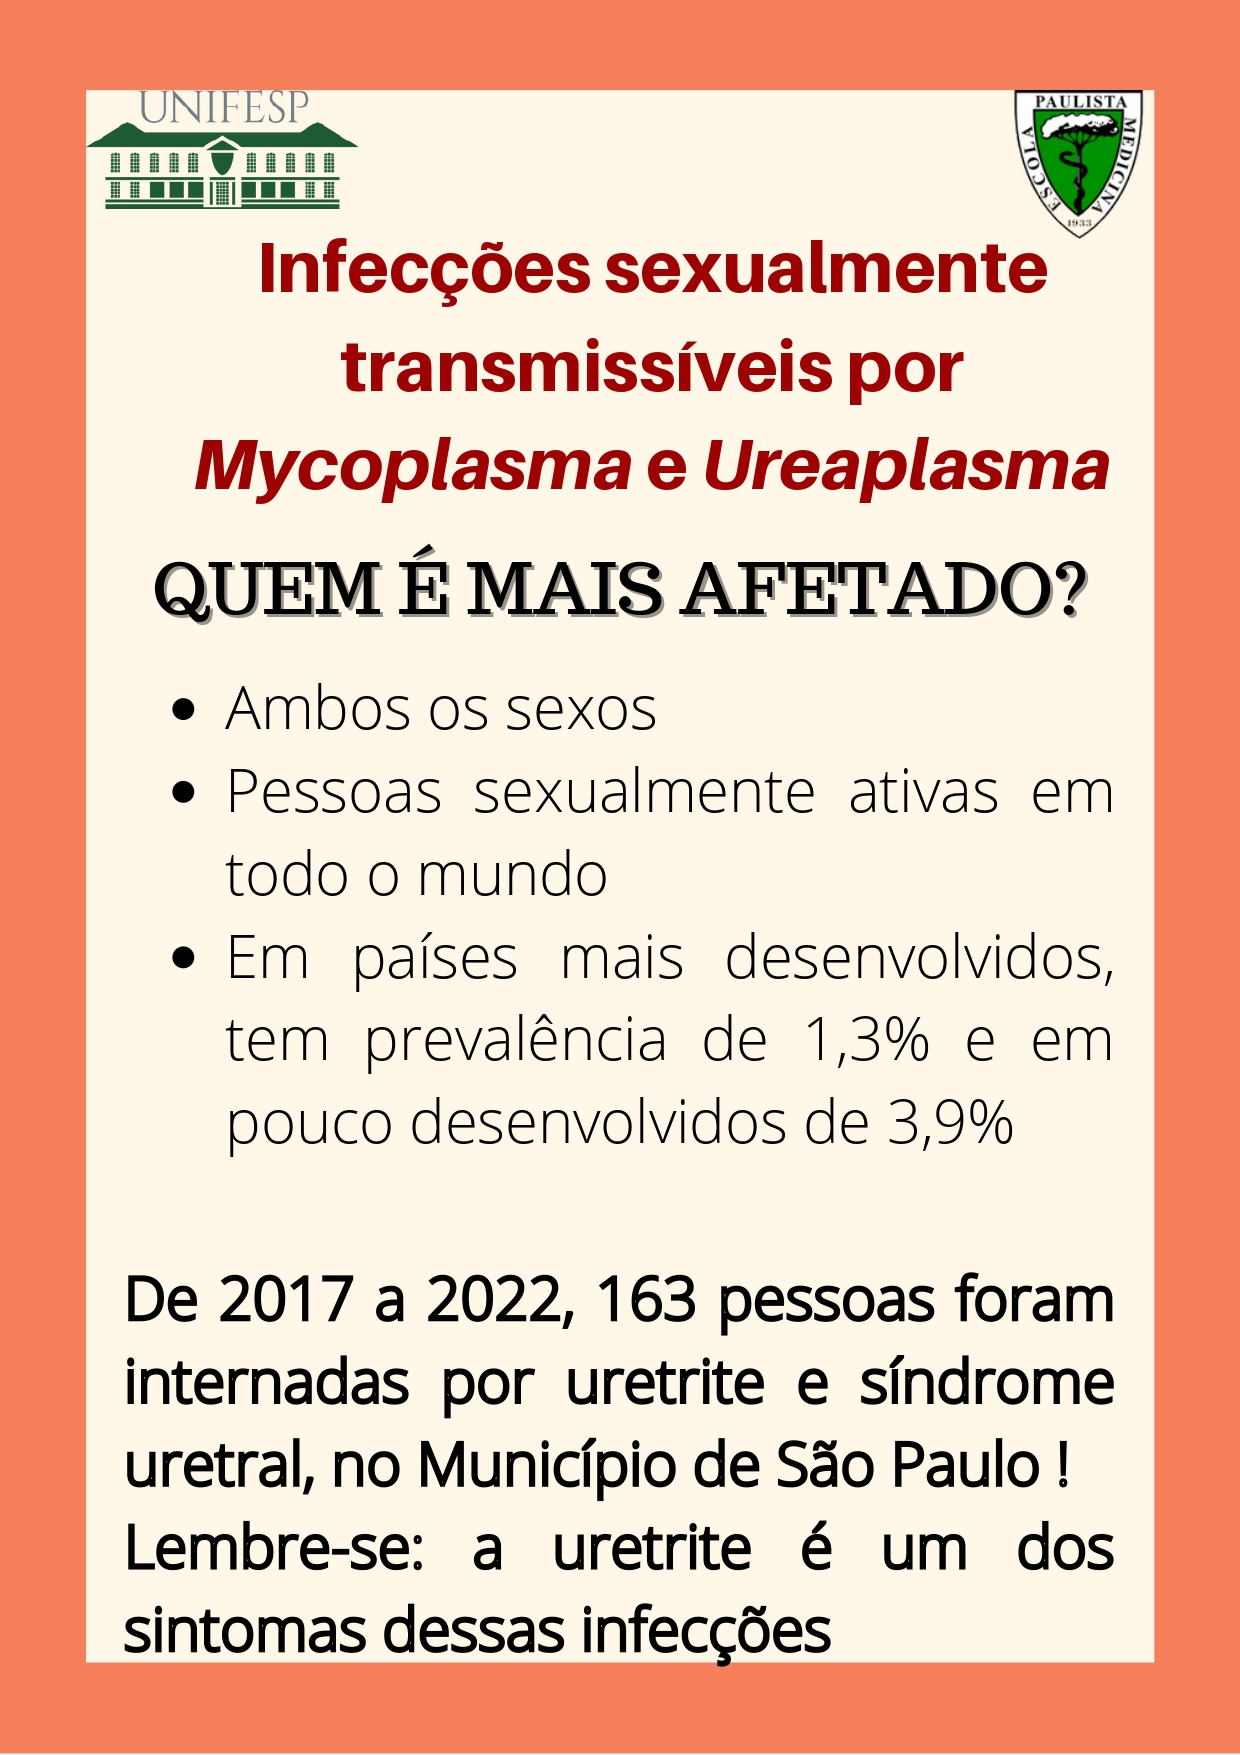 Mycoplasma e Ureaplasma page 0003